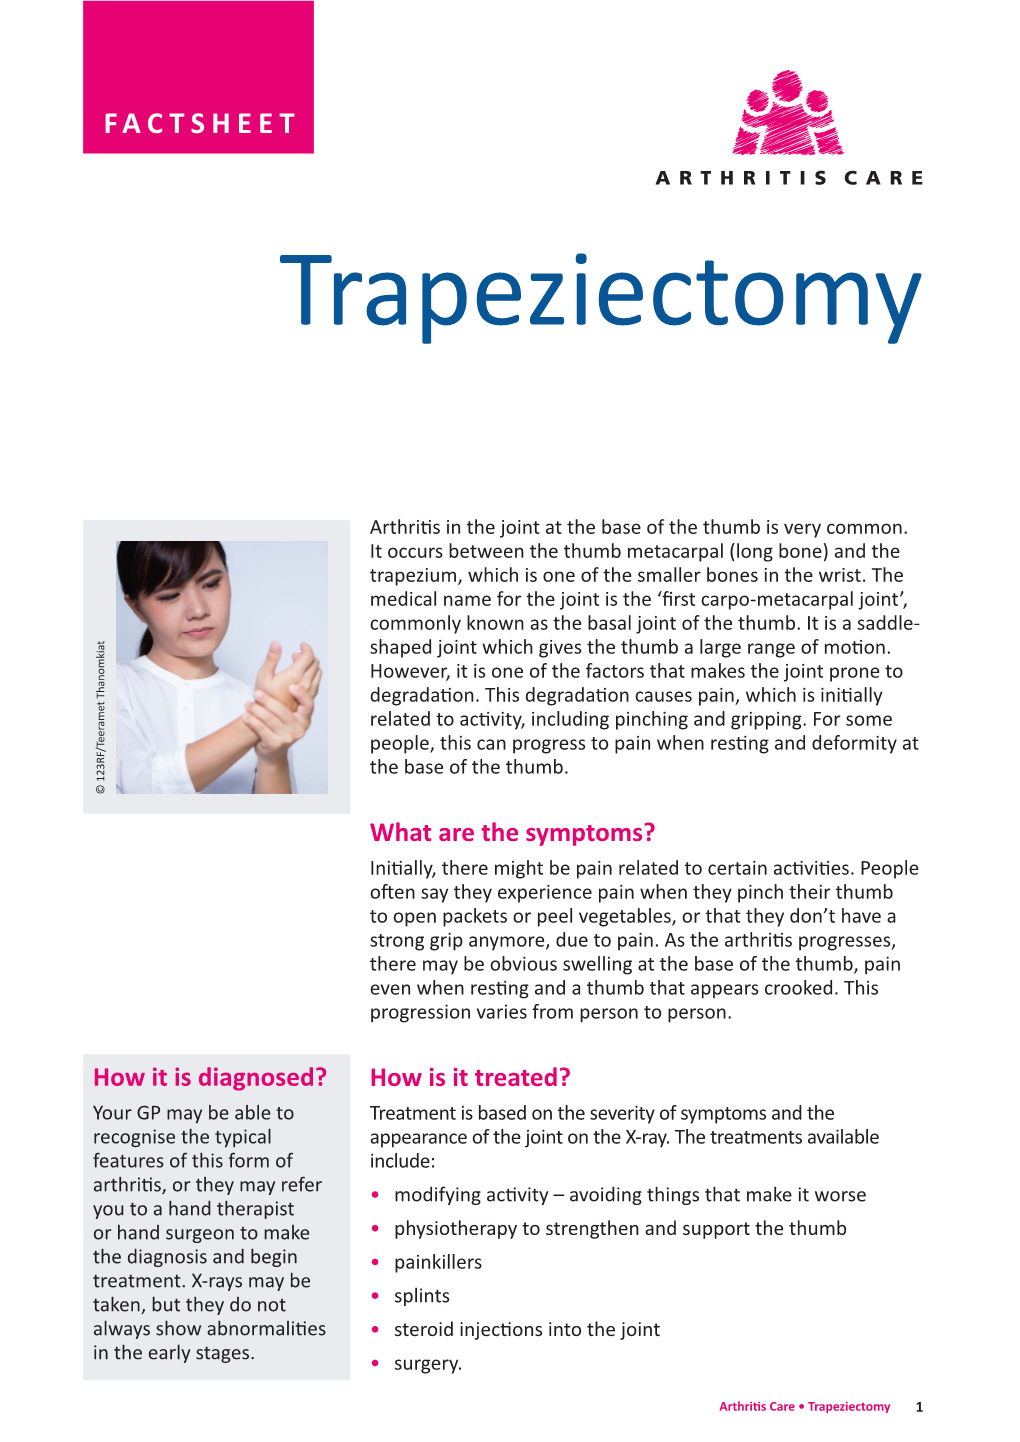 Trapeziectomy Factsheet